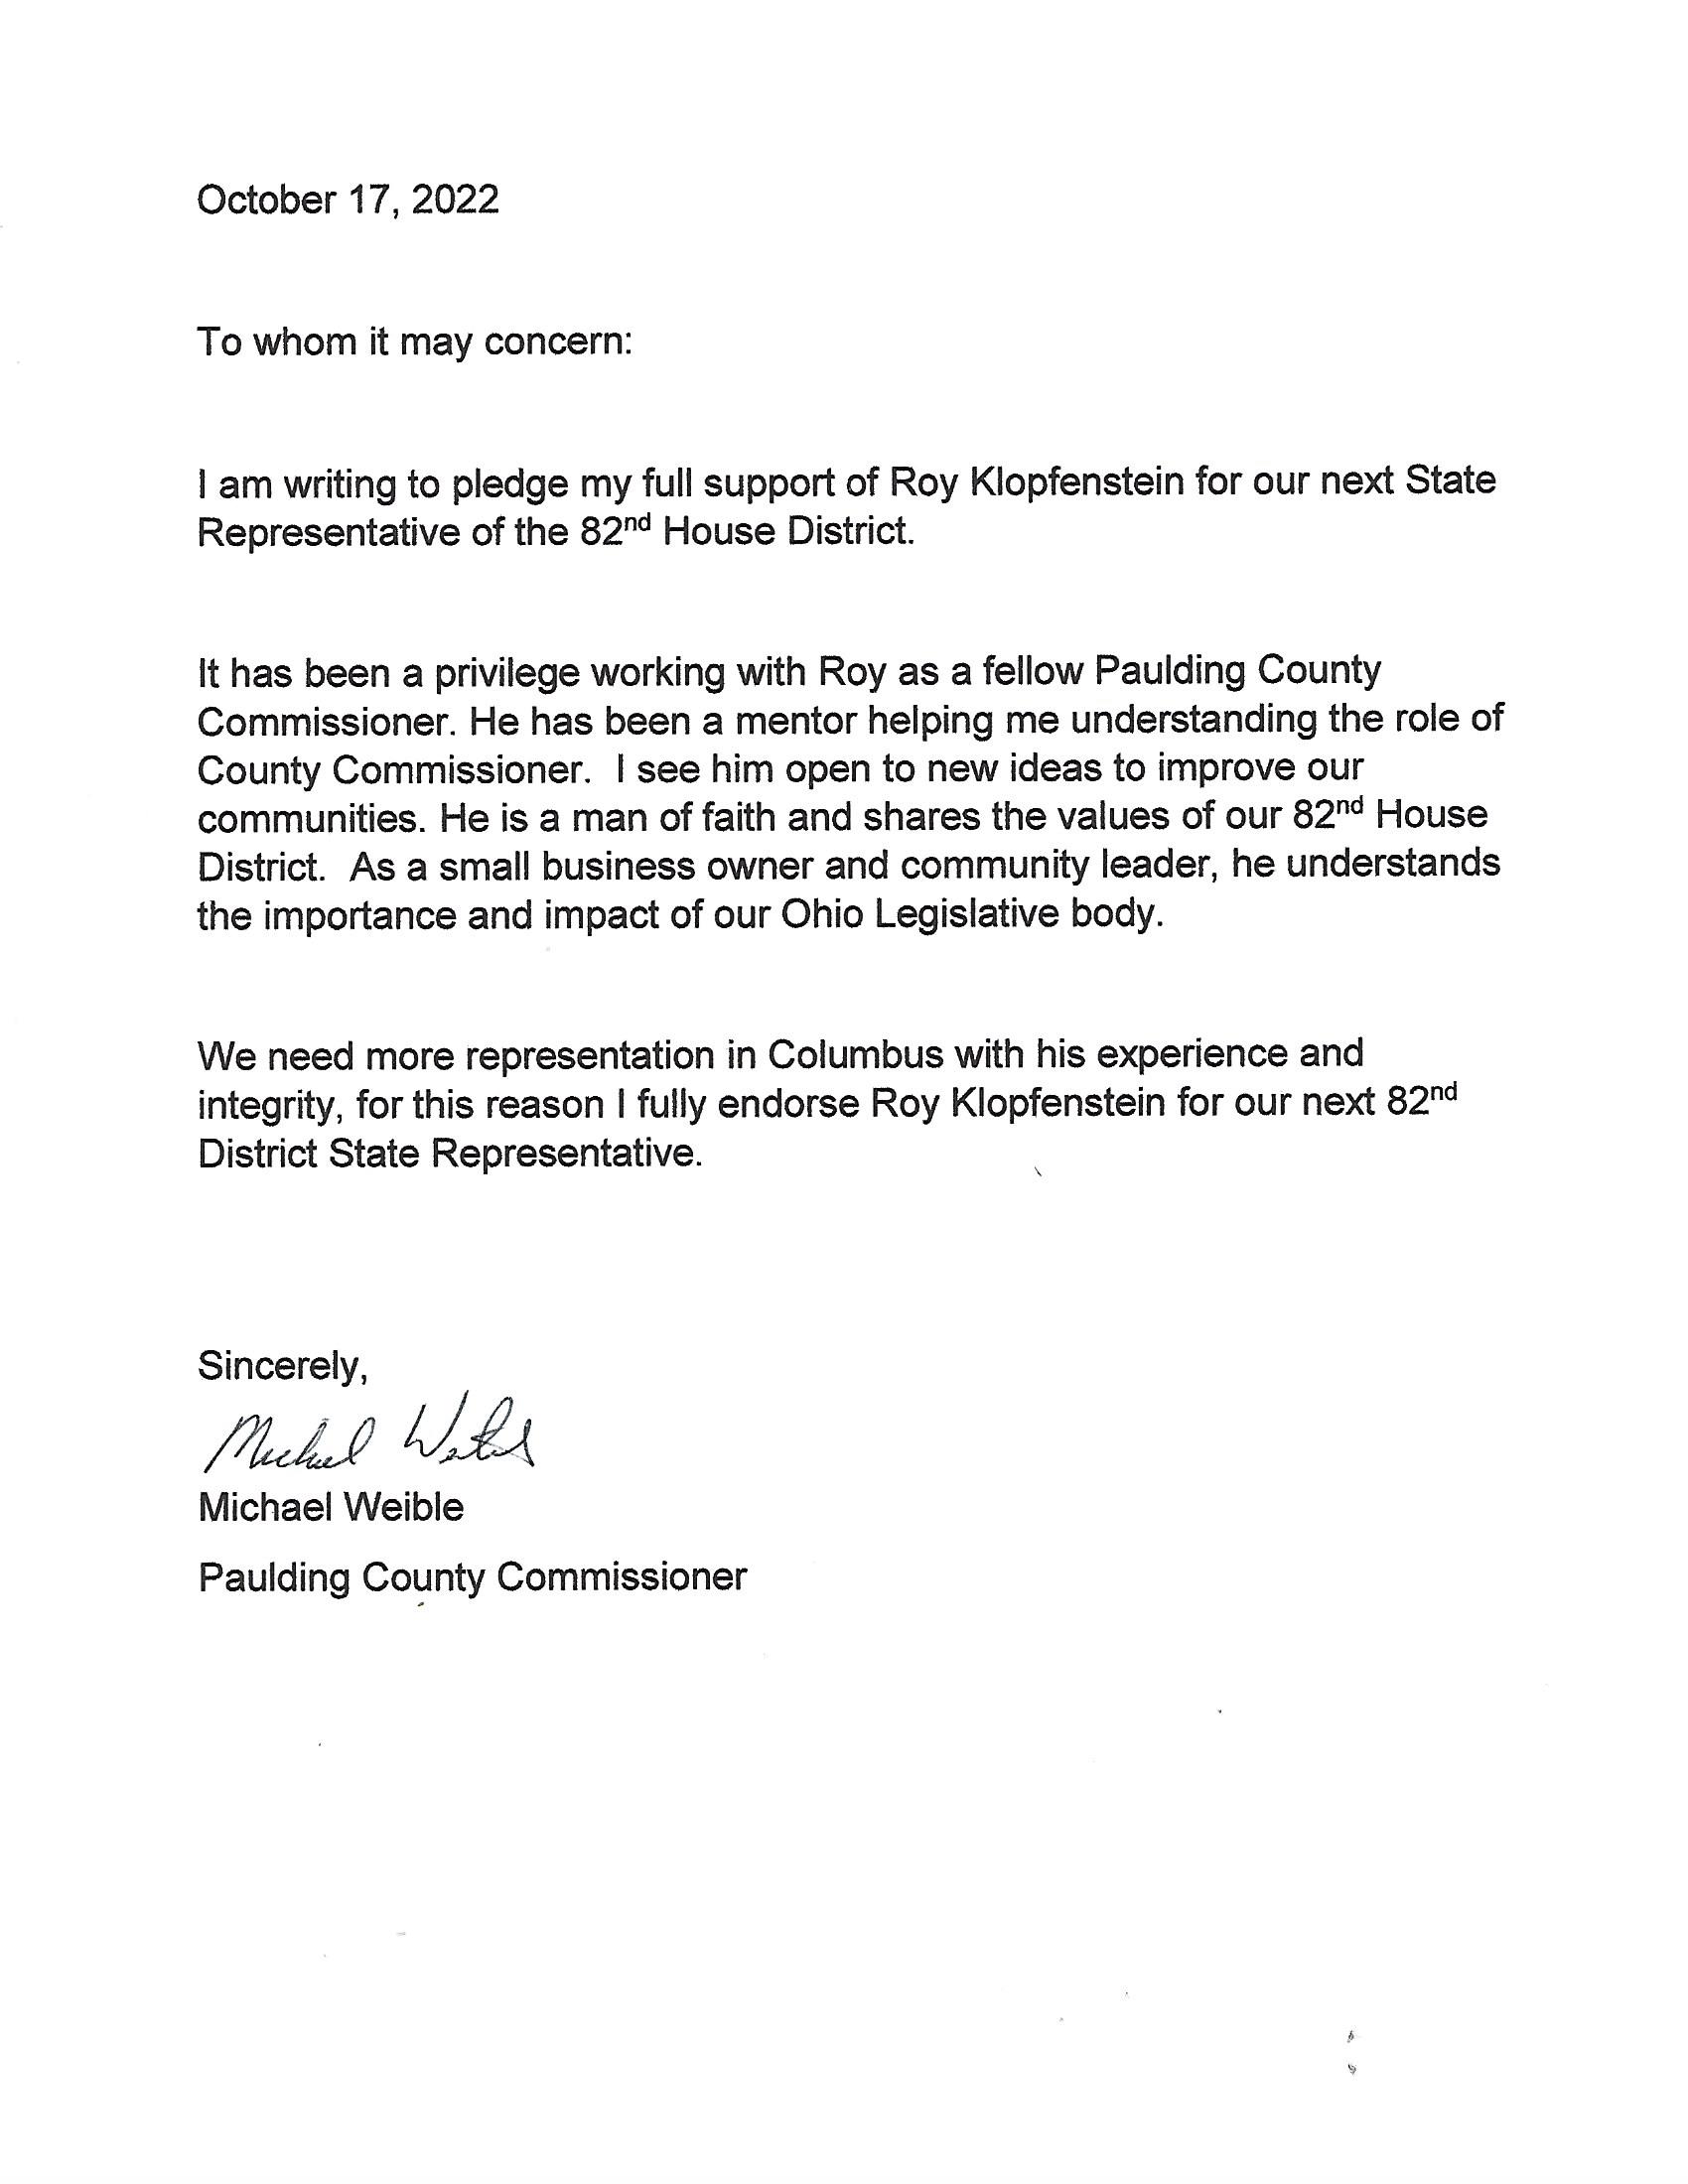 Paulding County Commissioner Michael Weible Endorsement